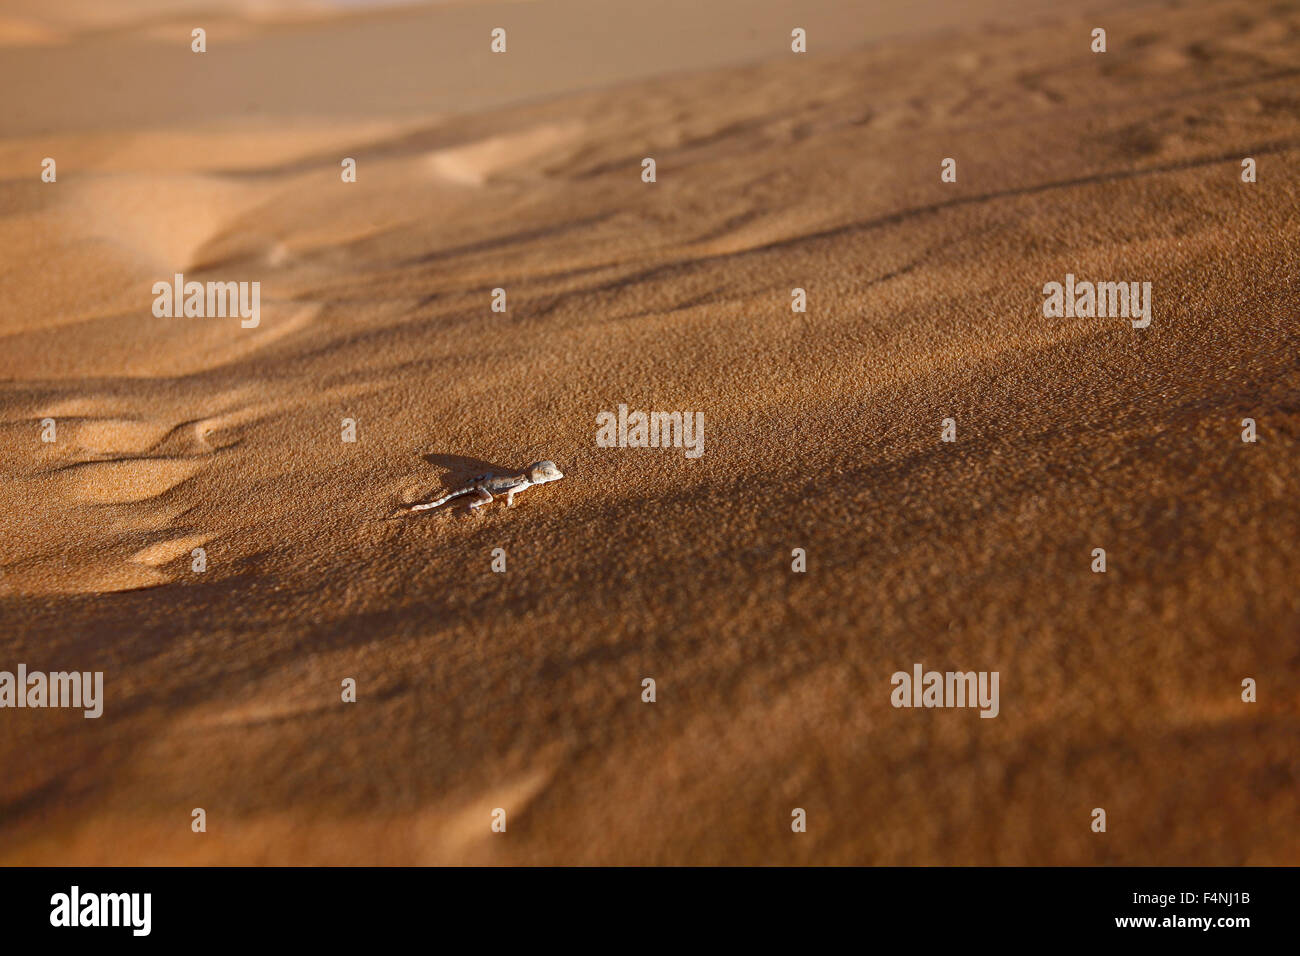 Algerian sand gecko, Tropiocolotes steudneri, on sand Stock Photo